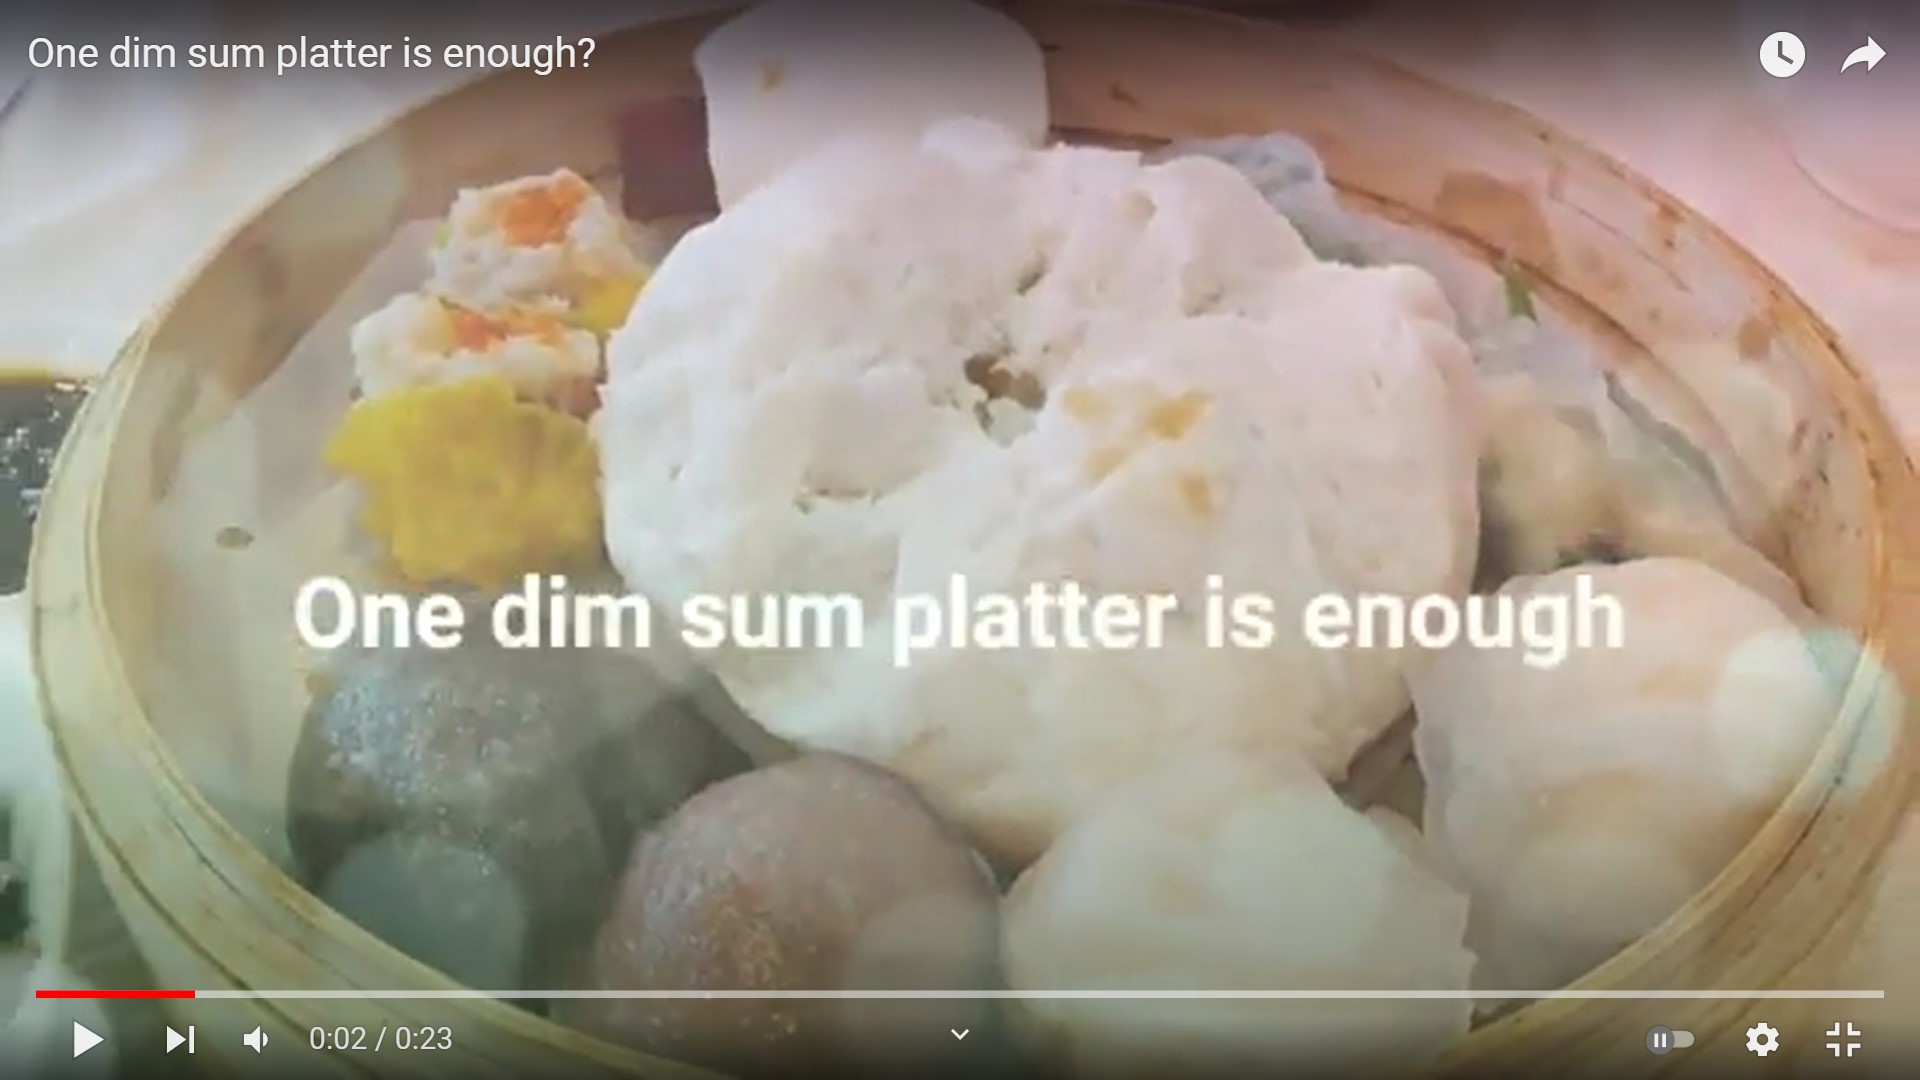 Frank's "One dim sum platter is enough?" snapshots video